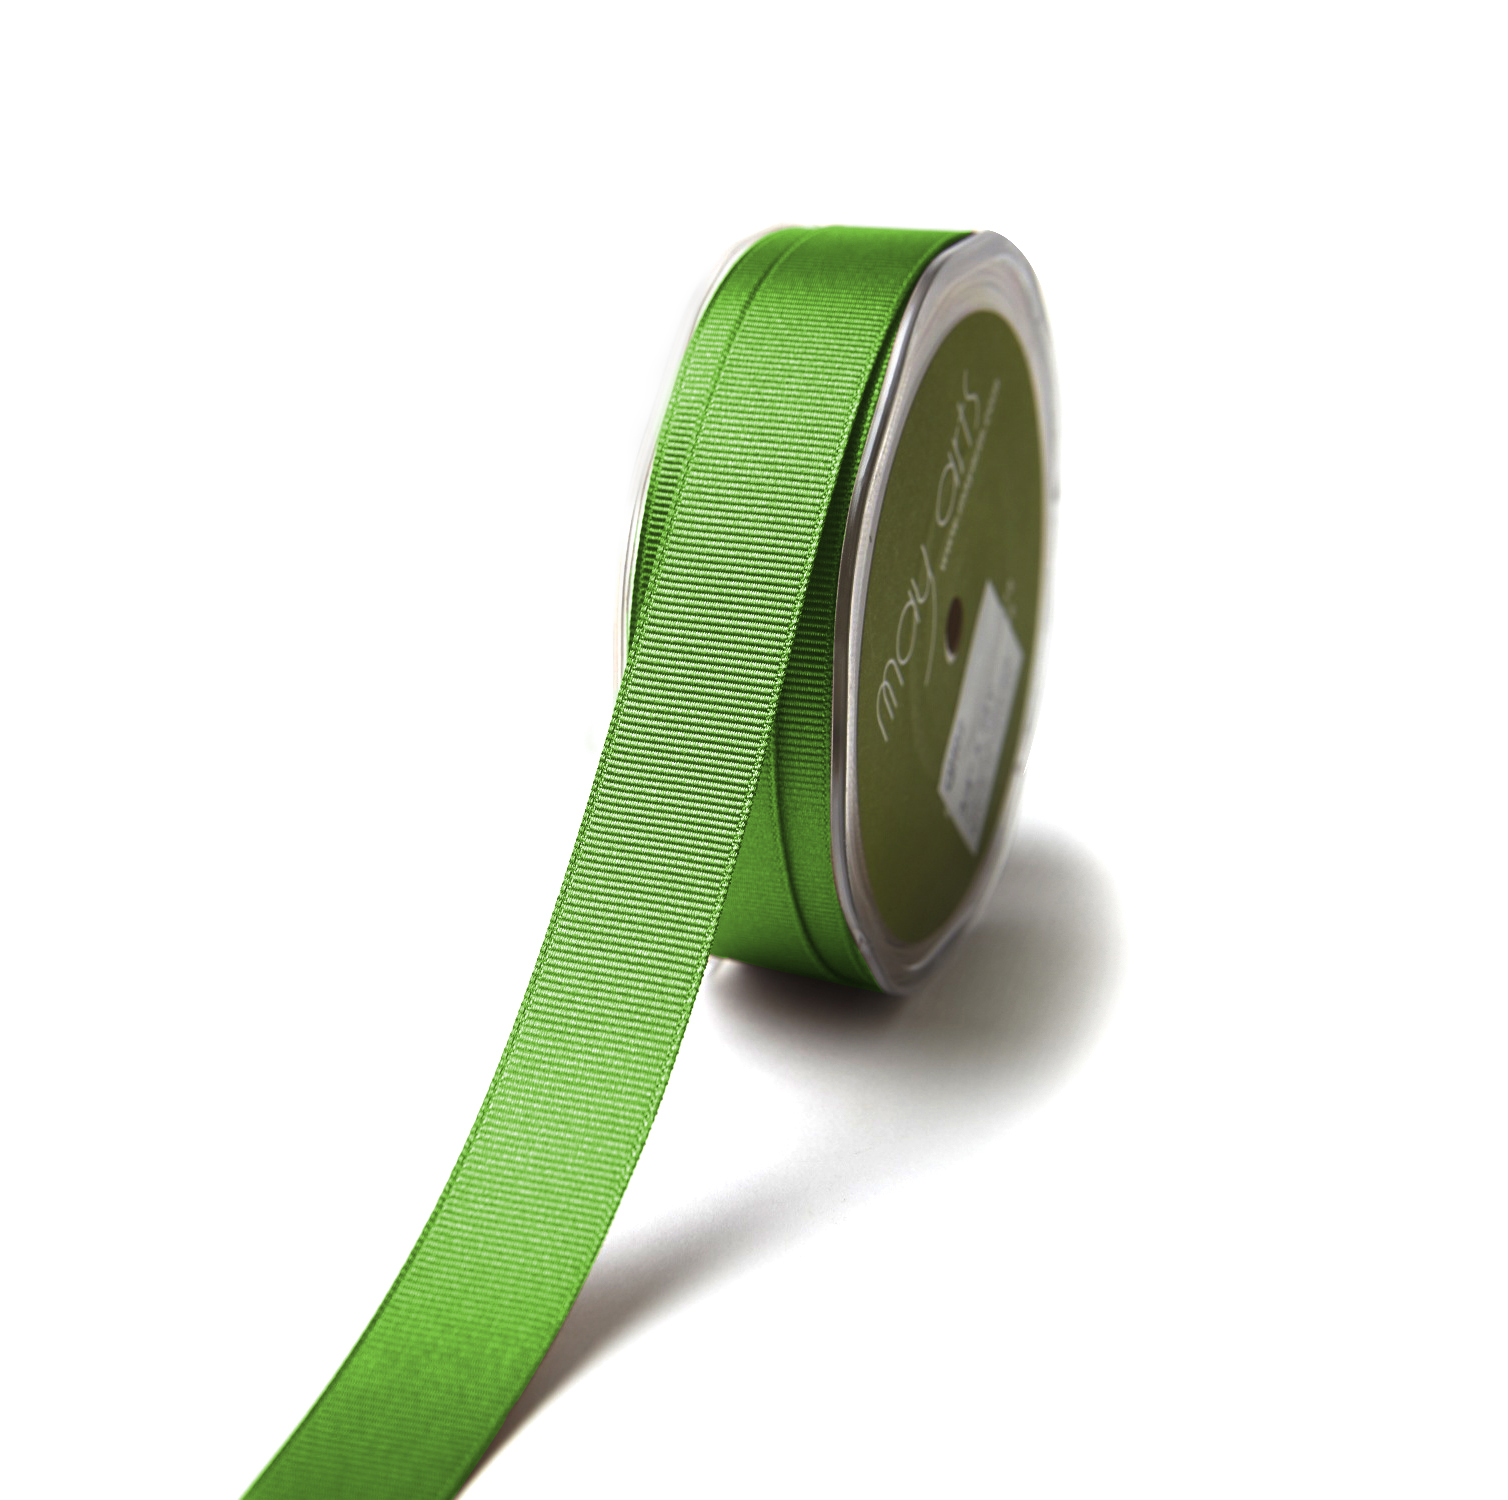 Green grosgrain polyester printed satin ribbon